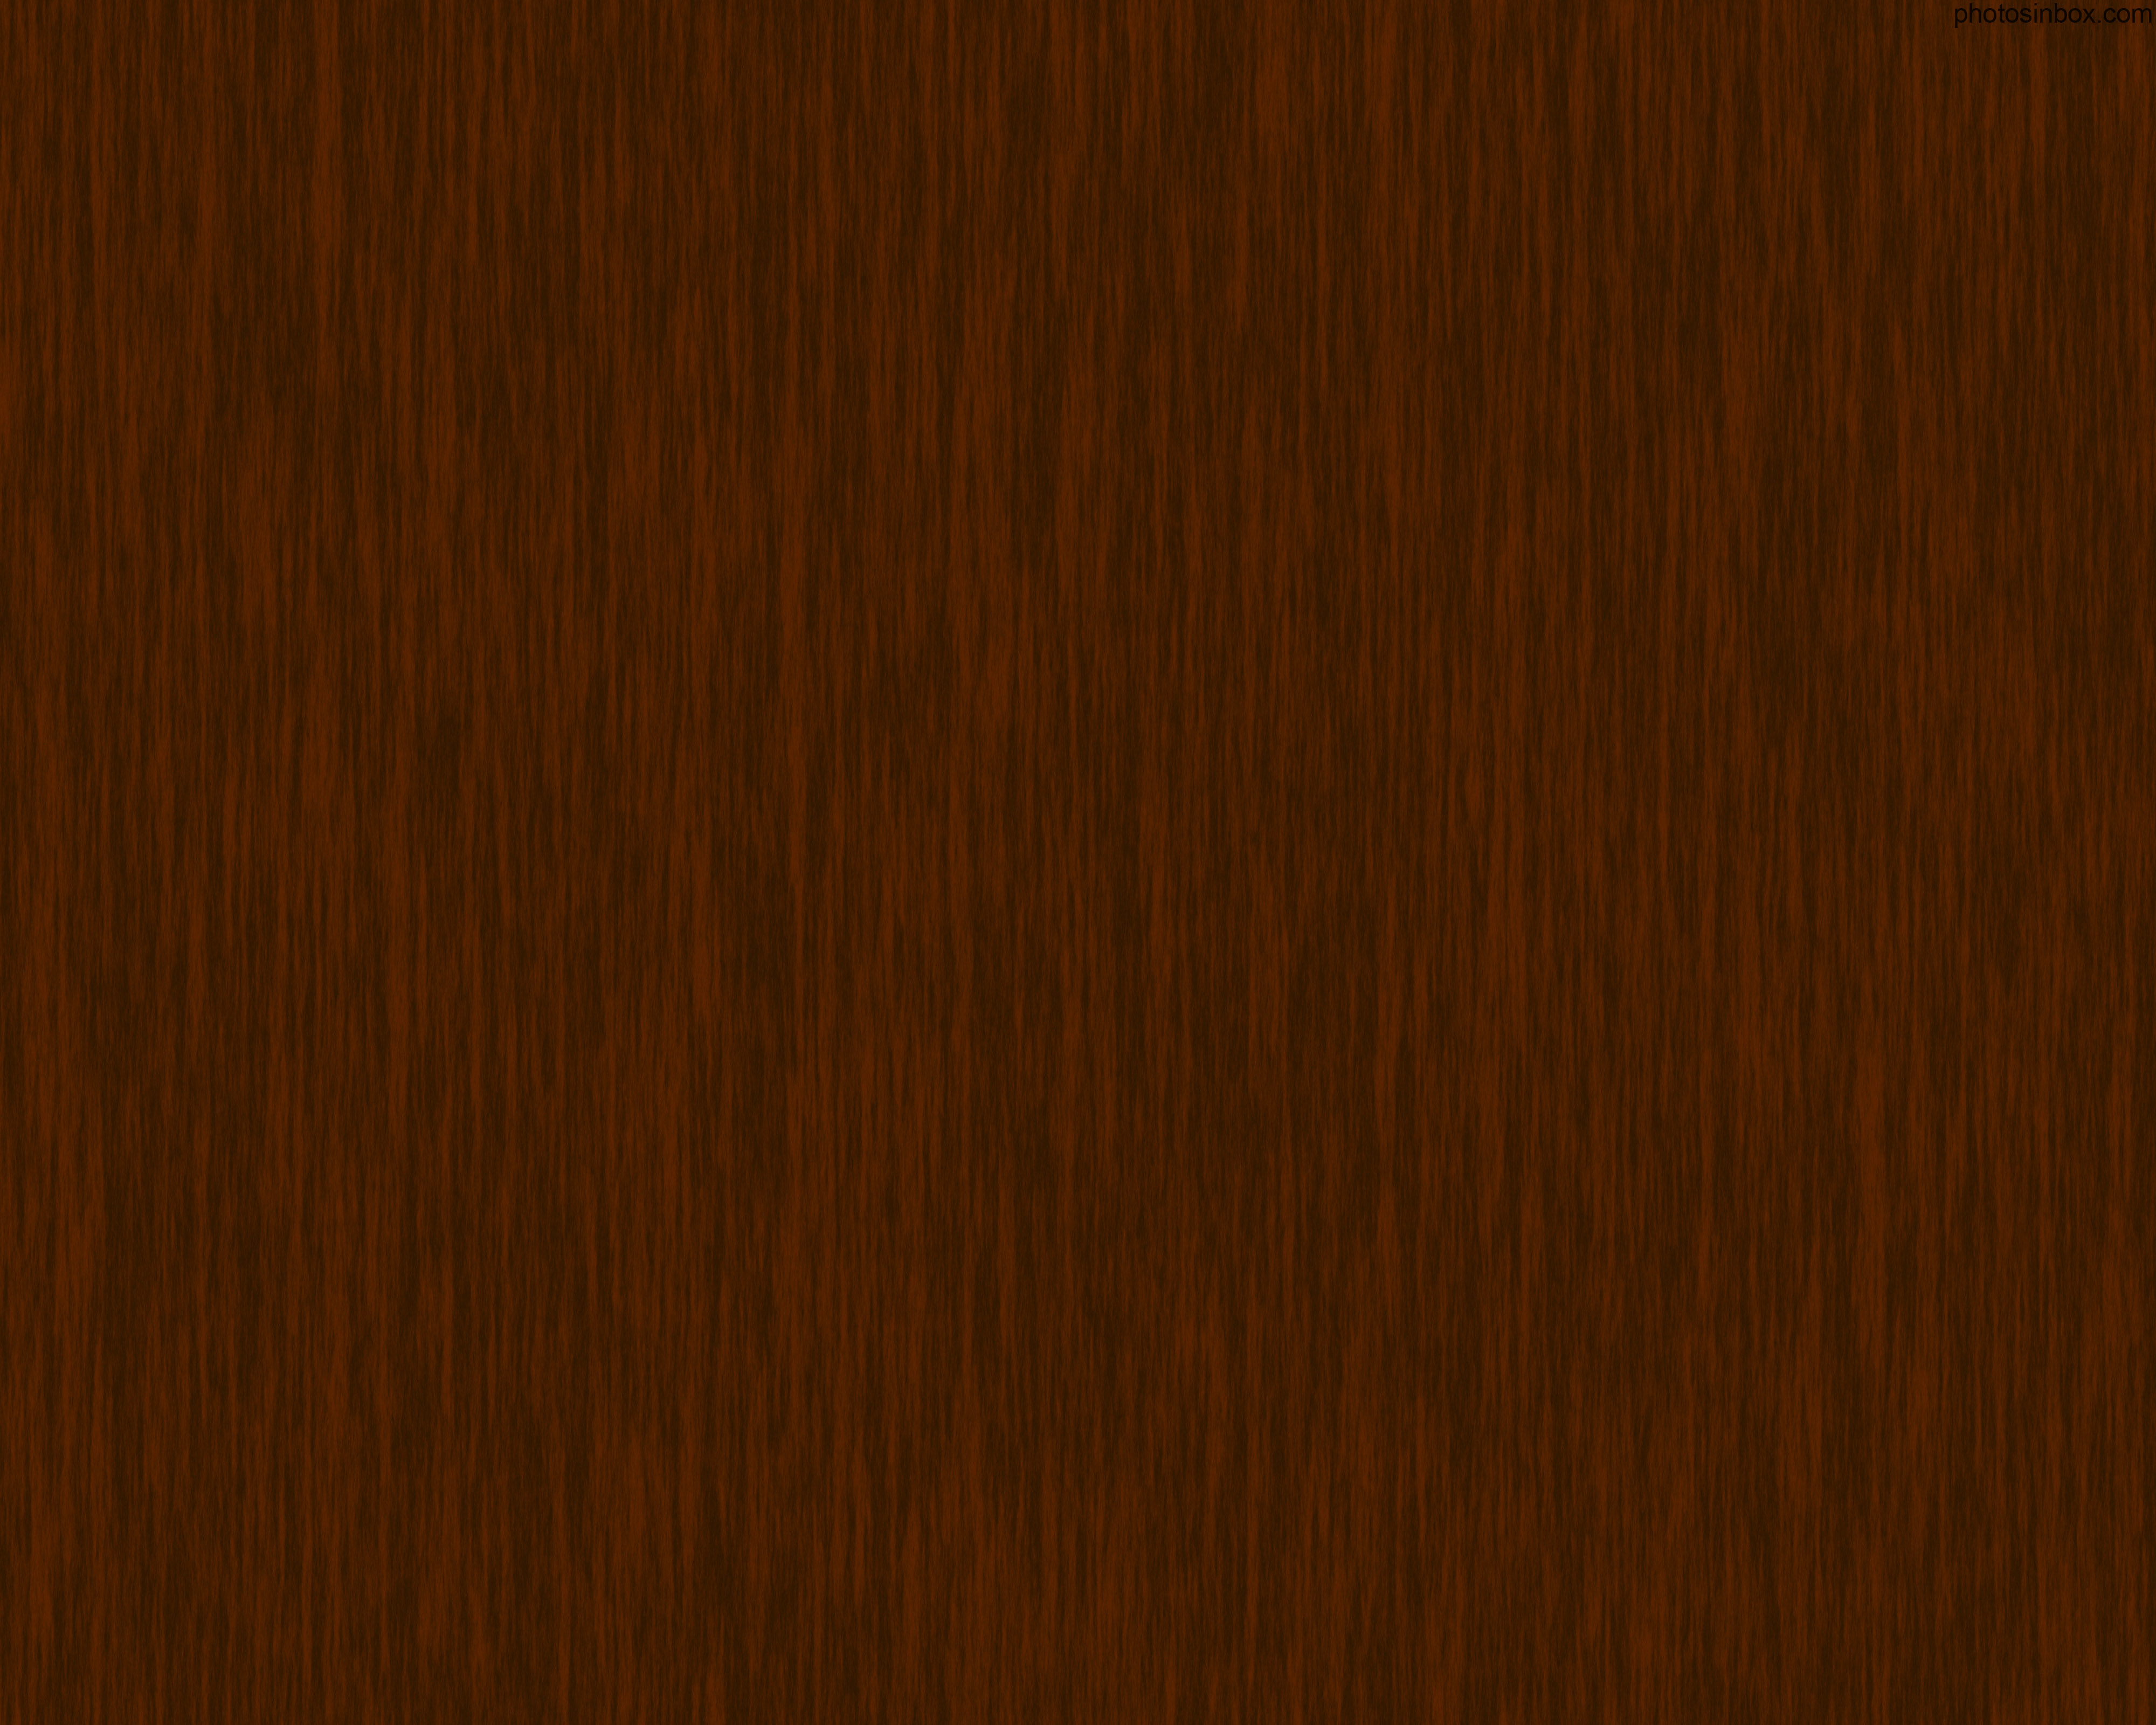 Wood Grain Texture For HD Wallpaper